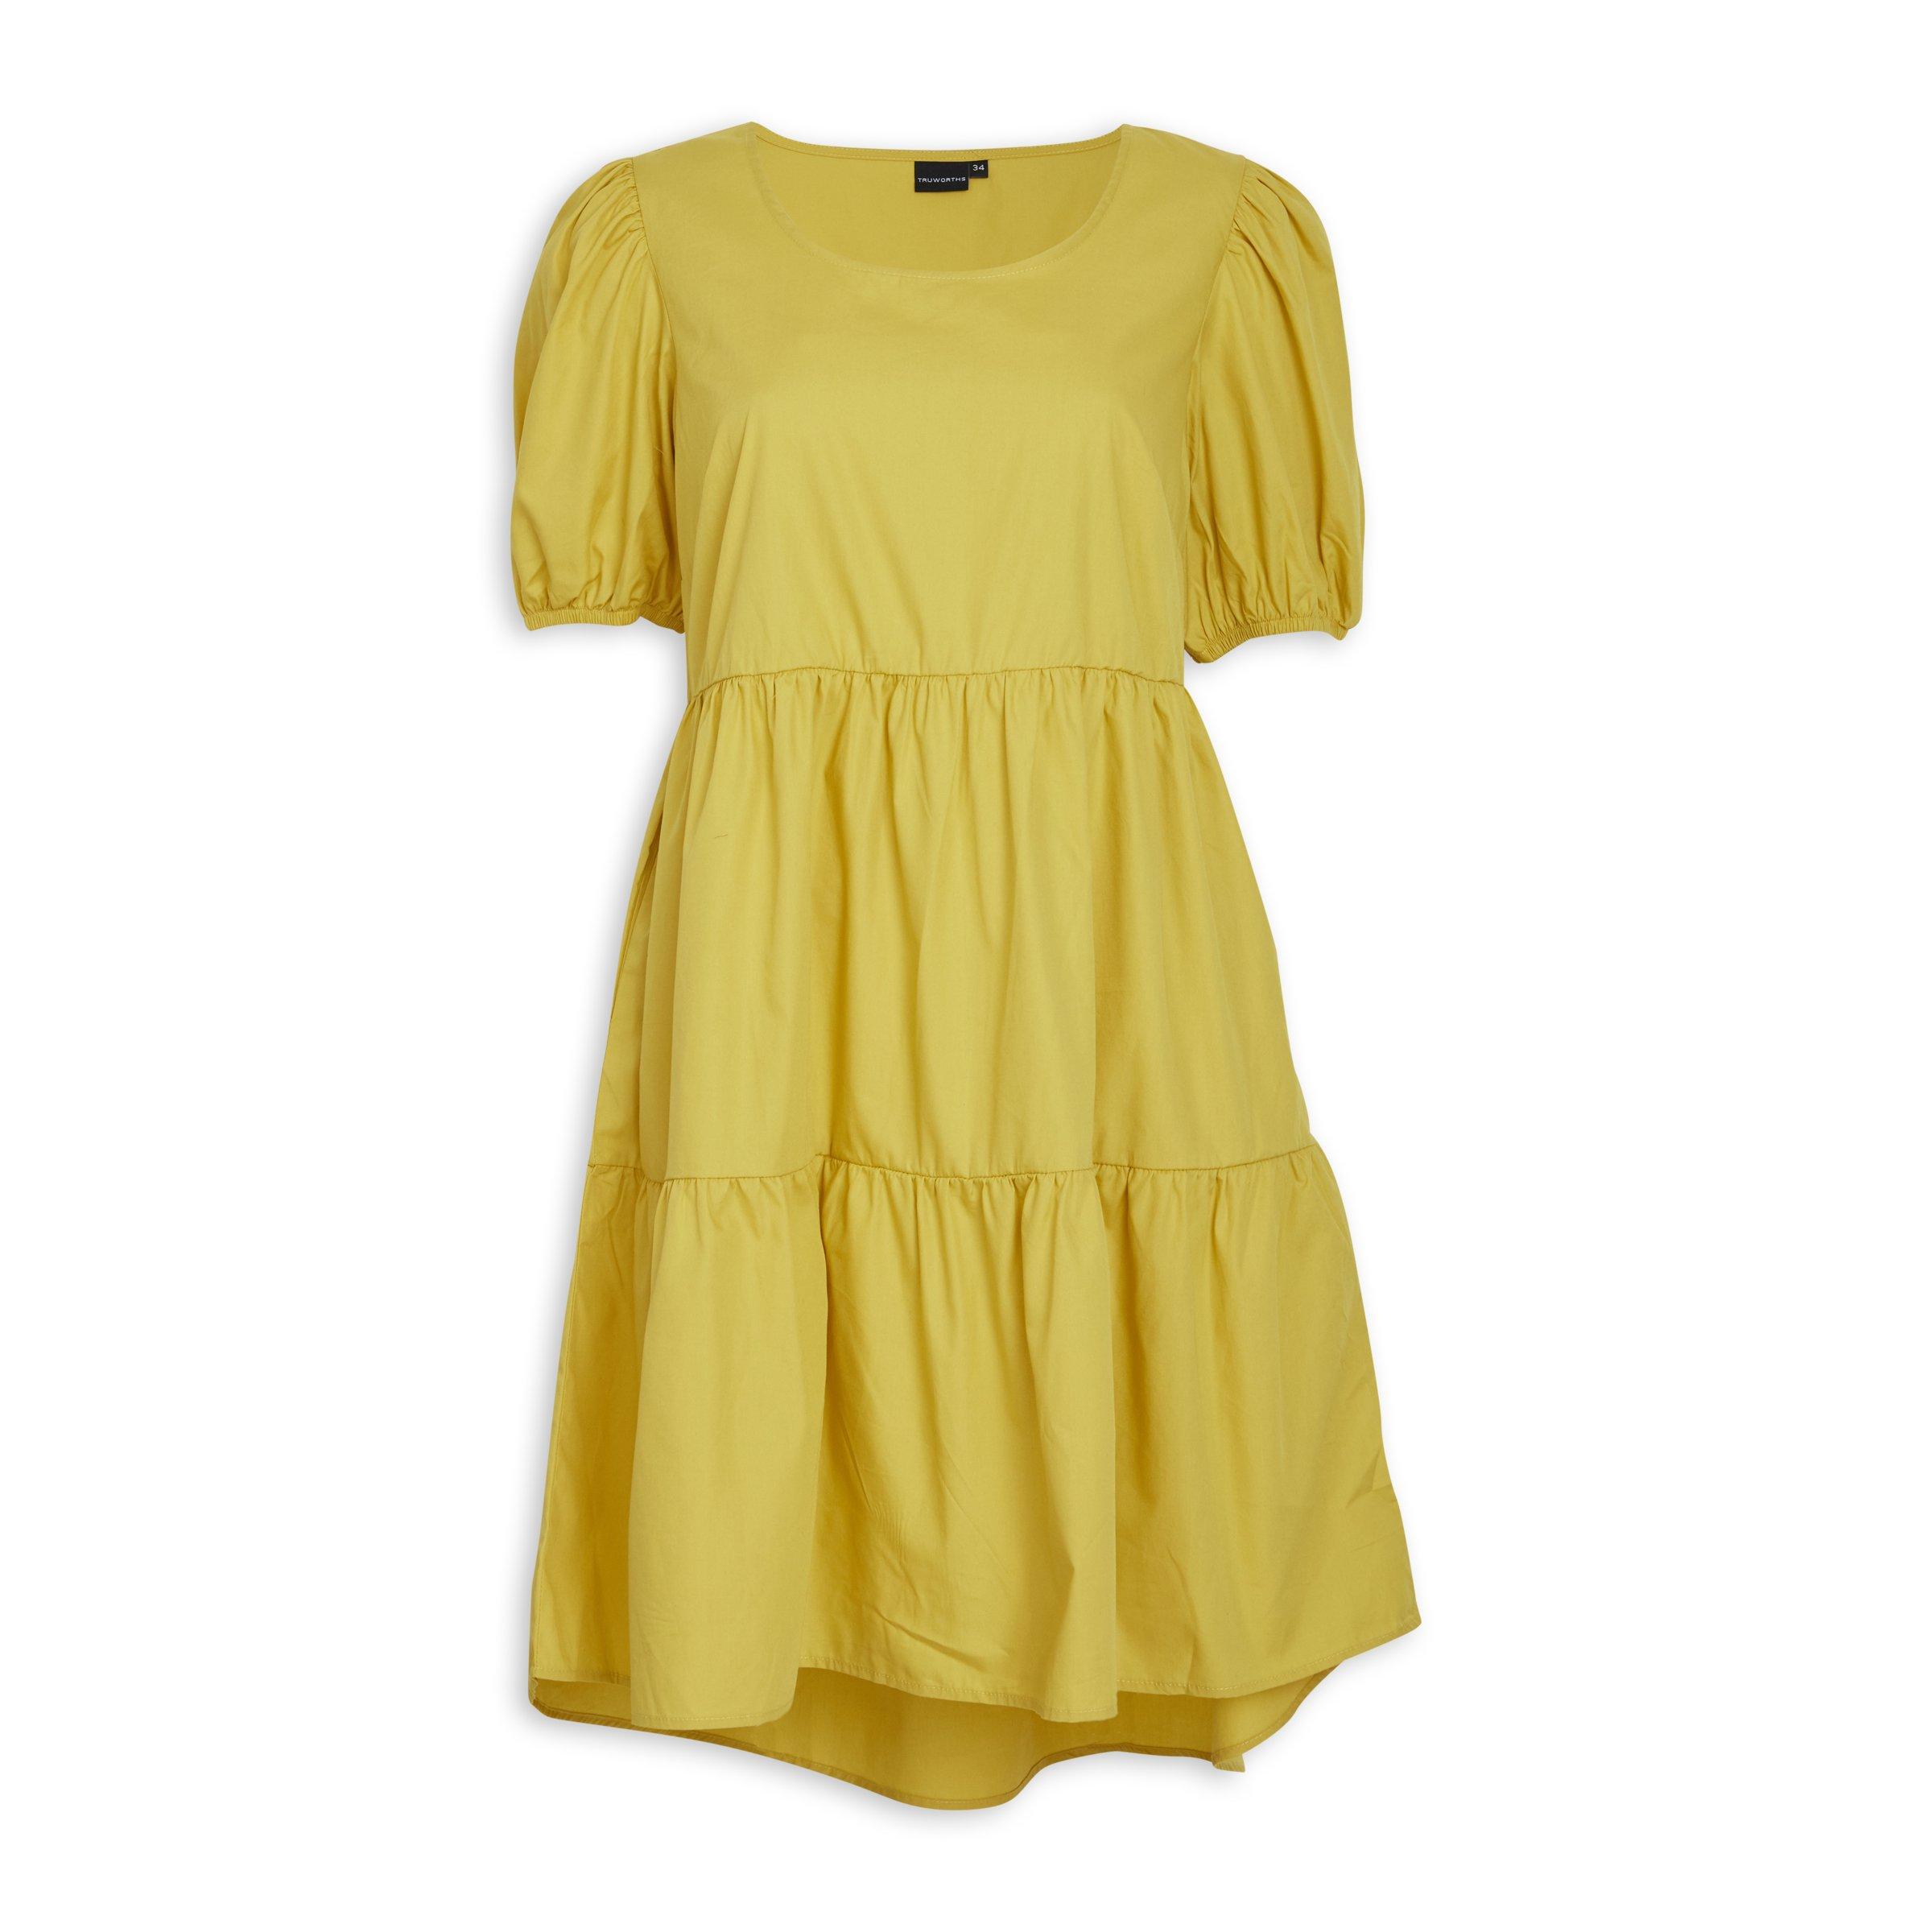 Buy OBR Yellow A-Line Dress Online | Truworths